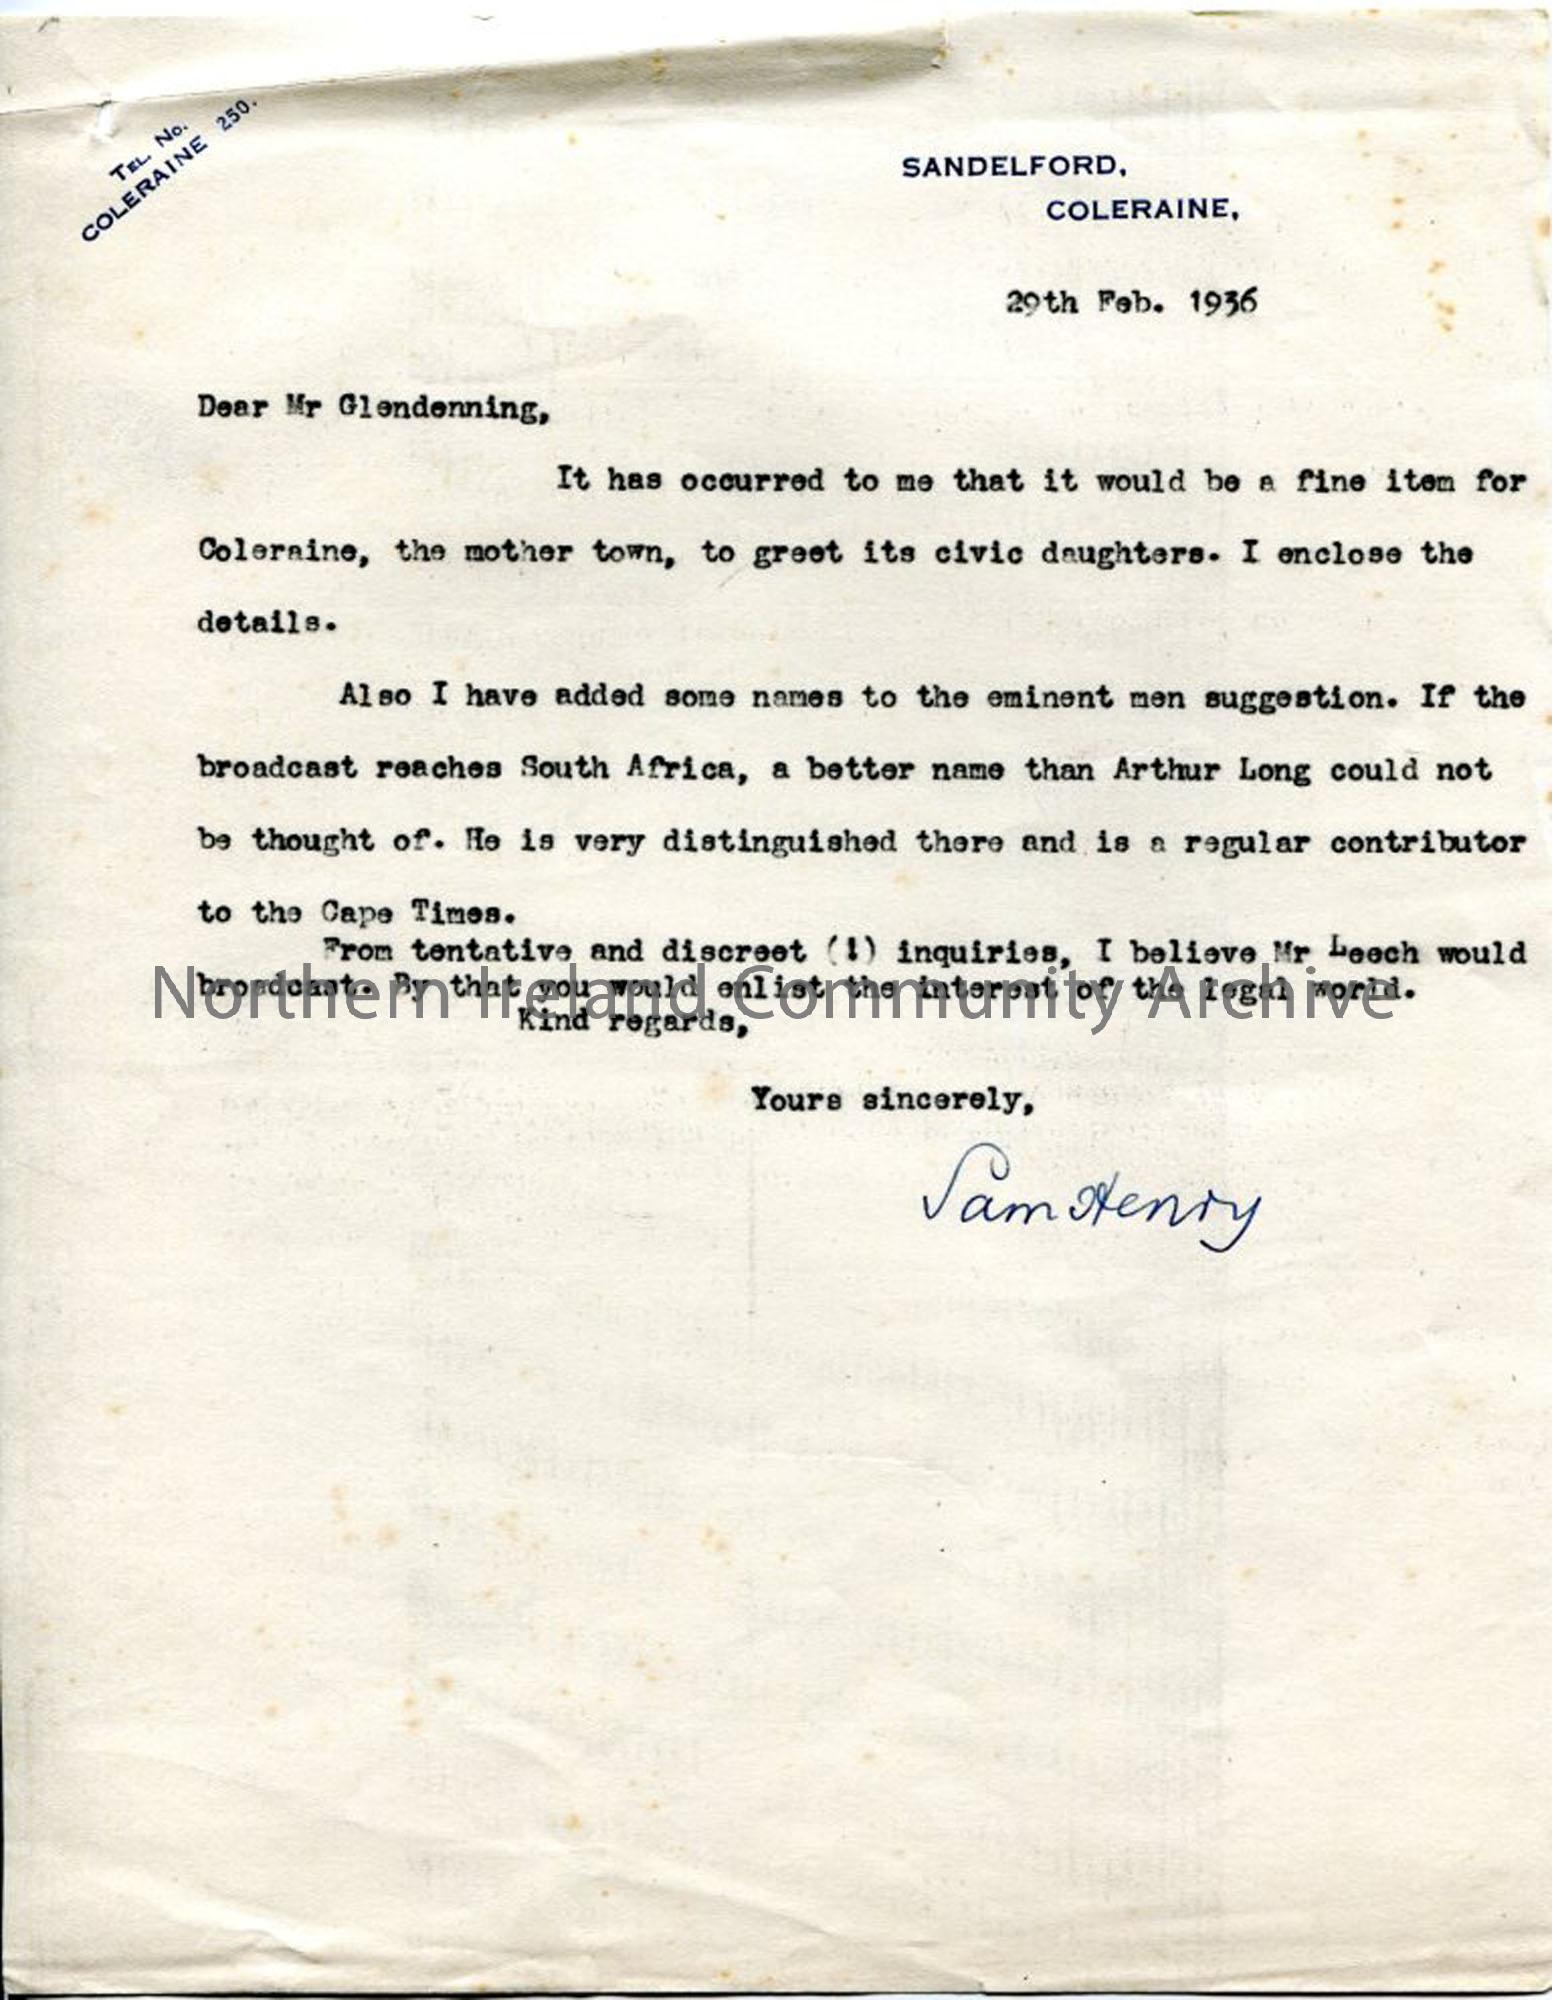 Letter to Mr Glendenning from Sam Henry, dated 29.2.1936